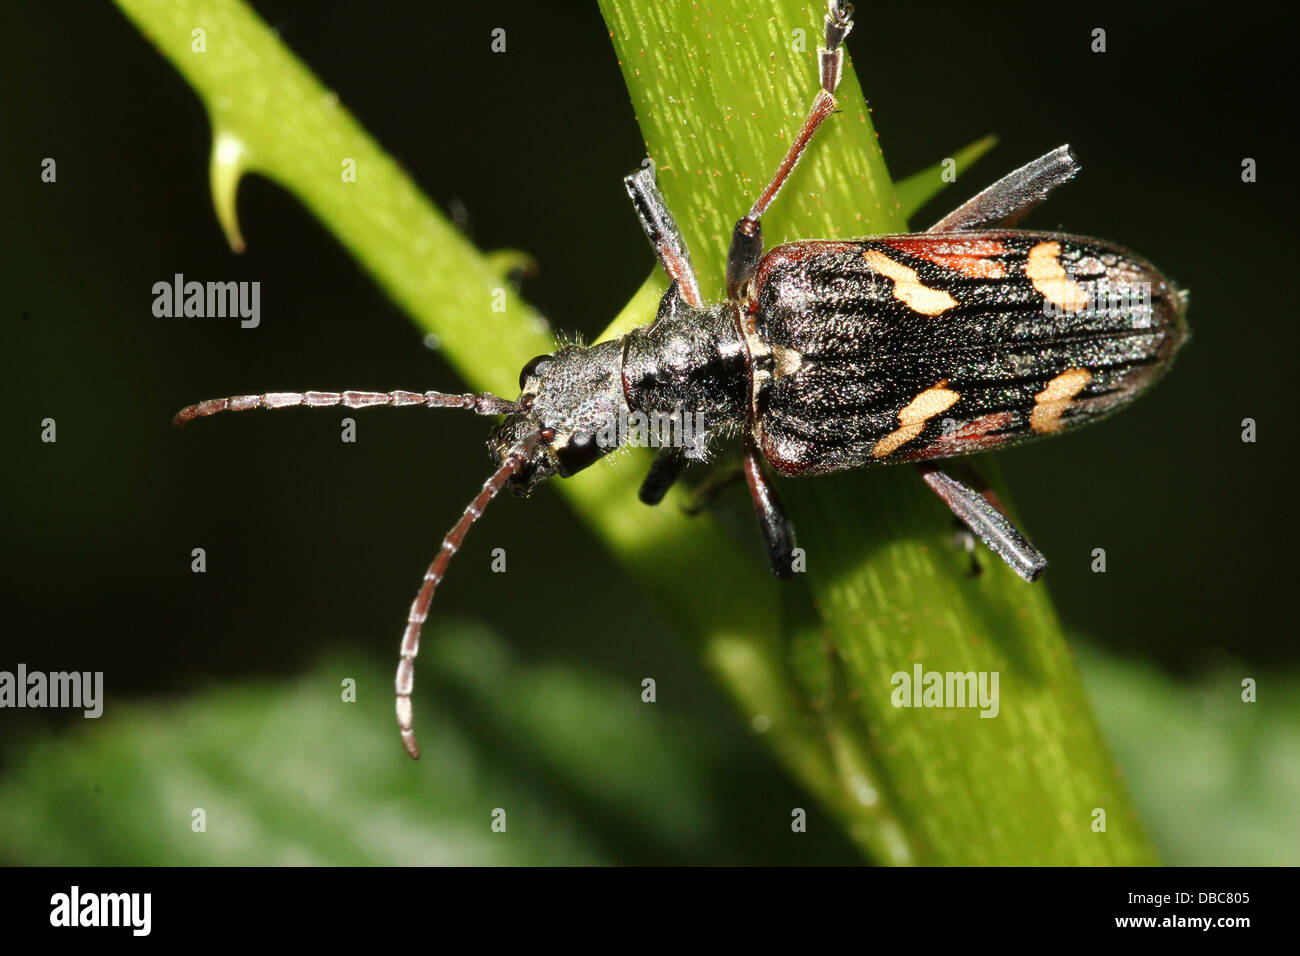 Very detailed Two-banded longhorn beetle (Rhagium bifasciatum) close-ups in various poses (10 images) Stock Photo